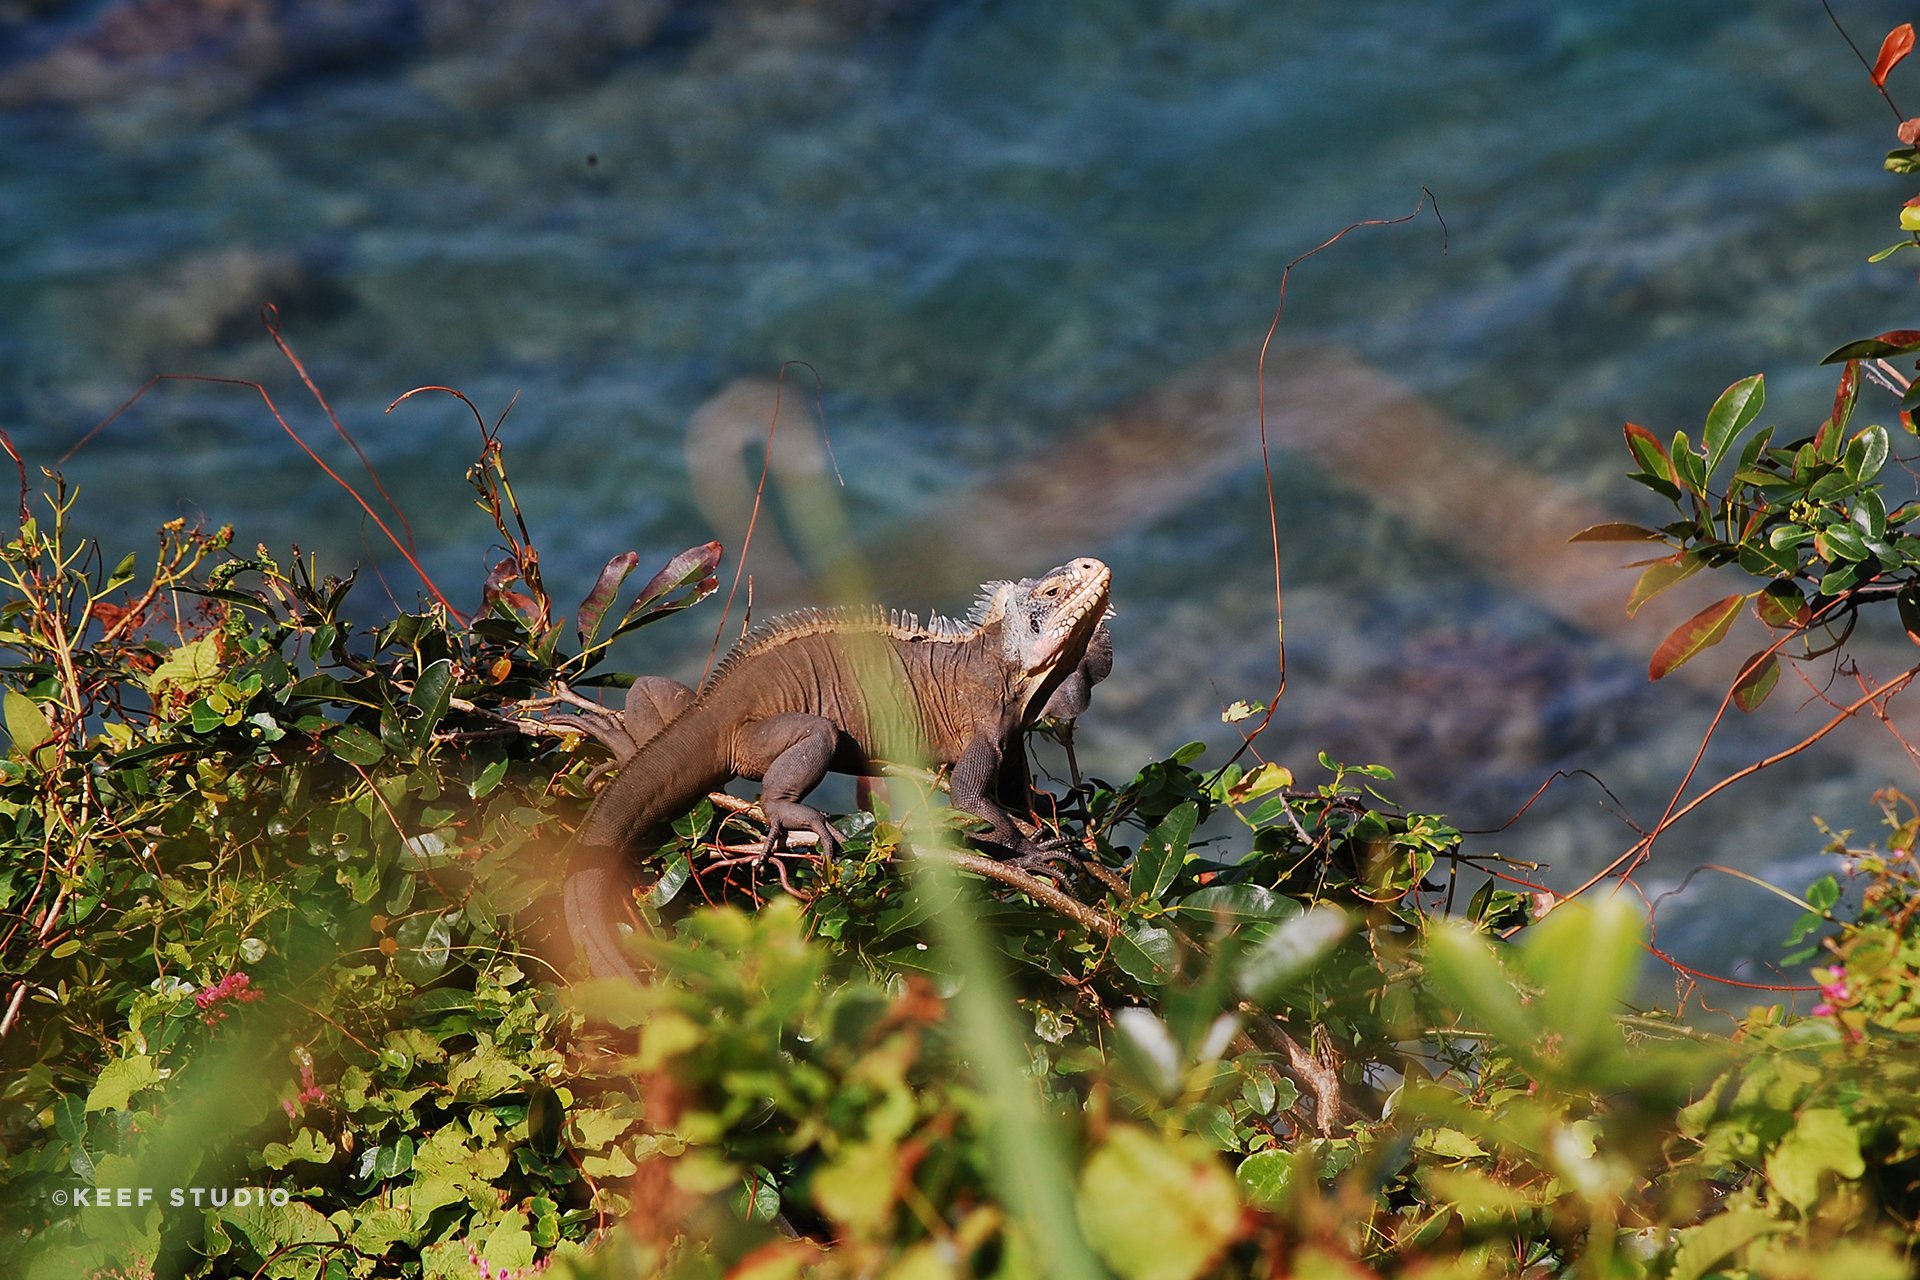 Caribbean iguana sun bathing